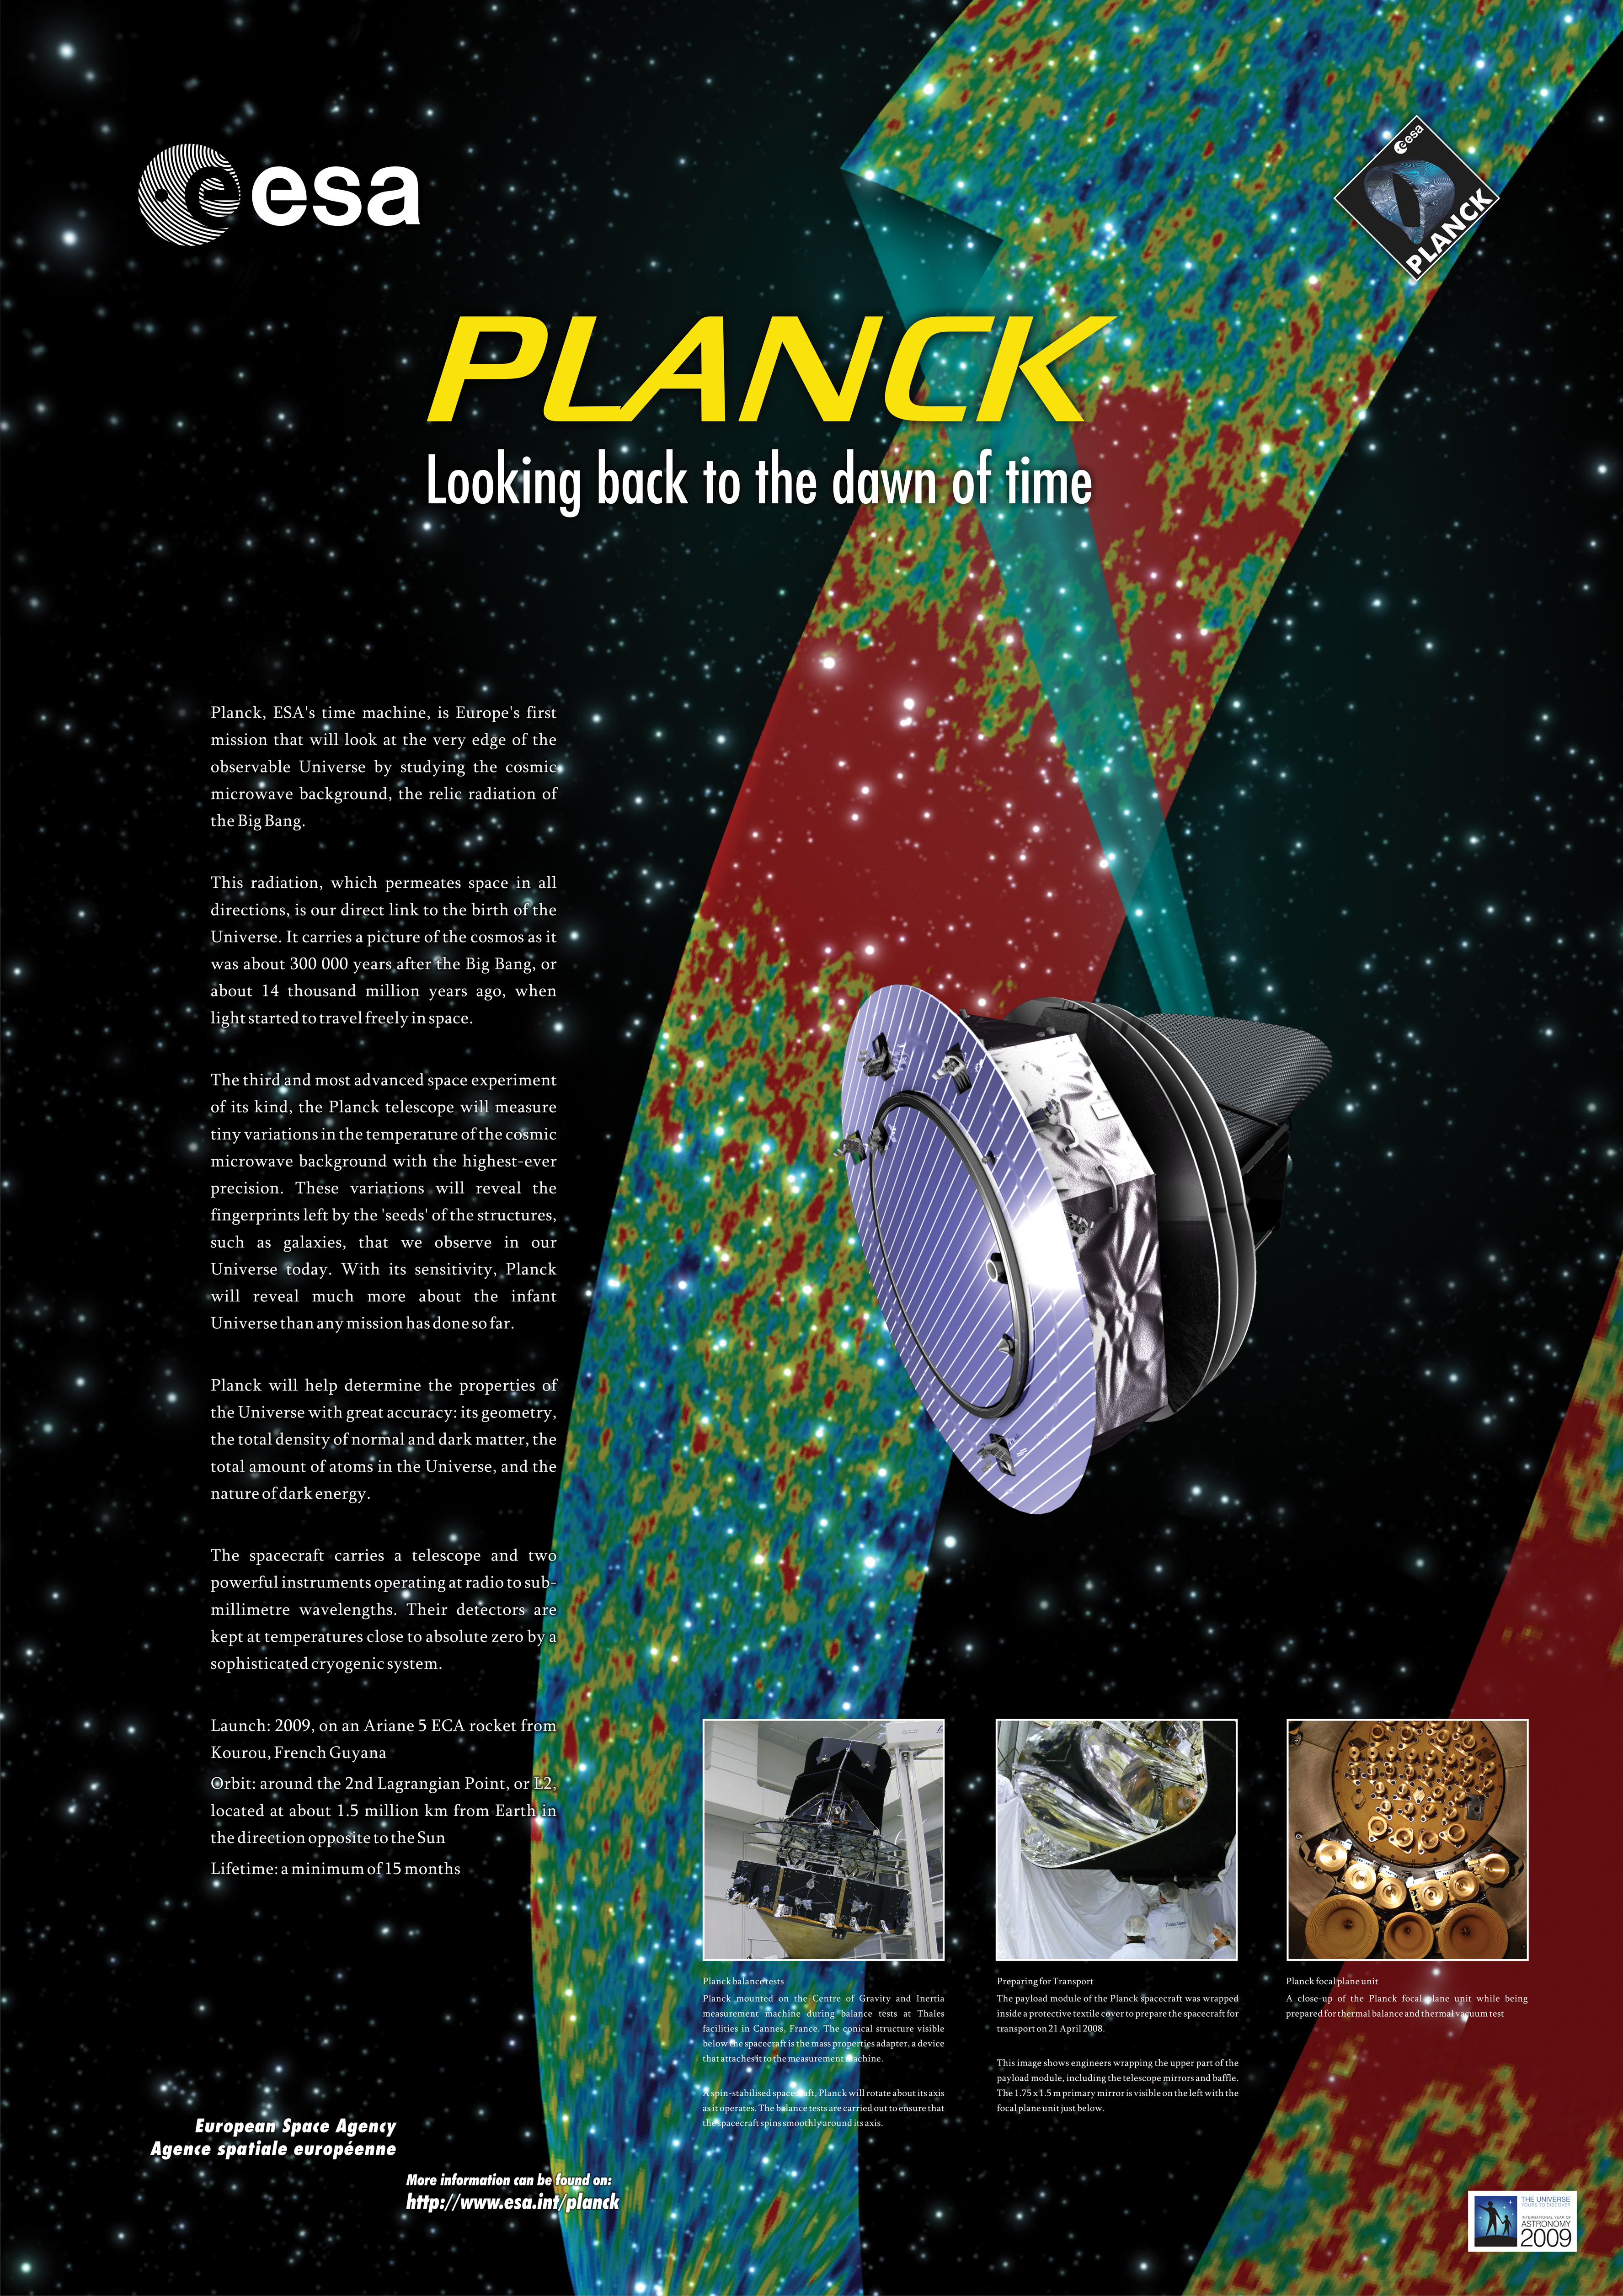 Esa Artist S Poster Of The Planck Satellite